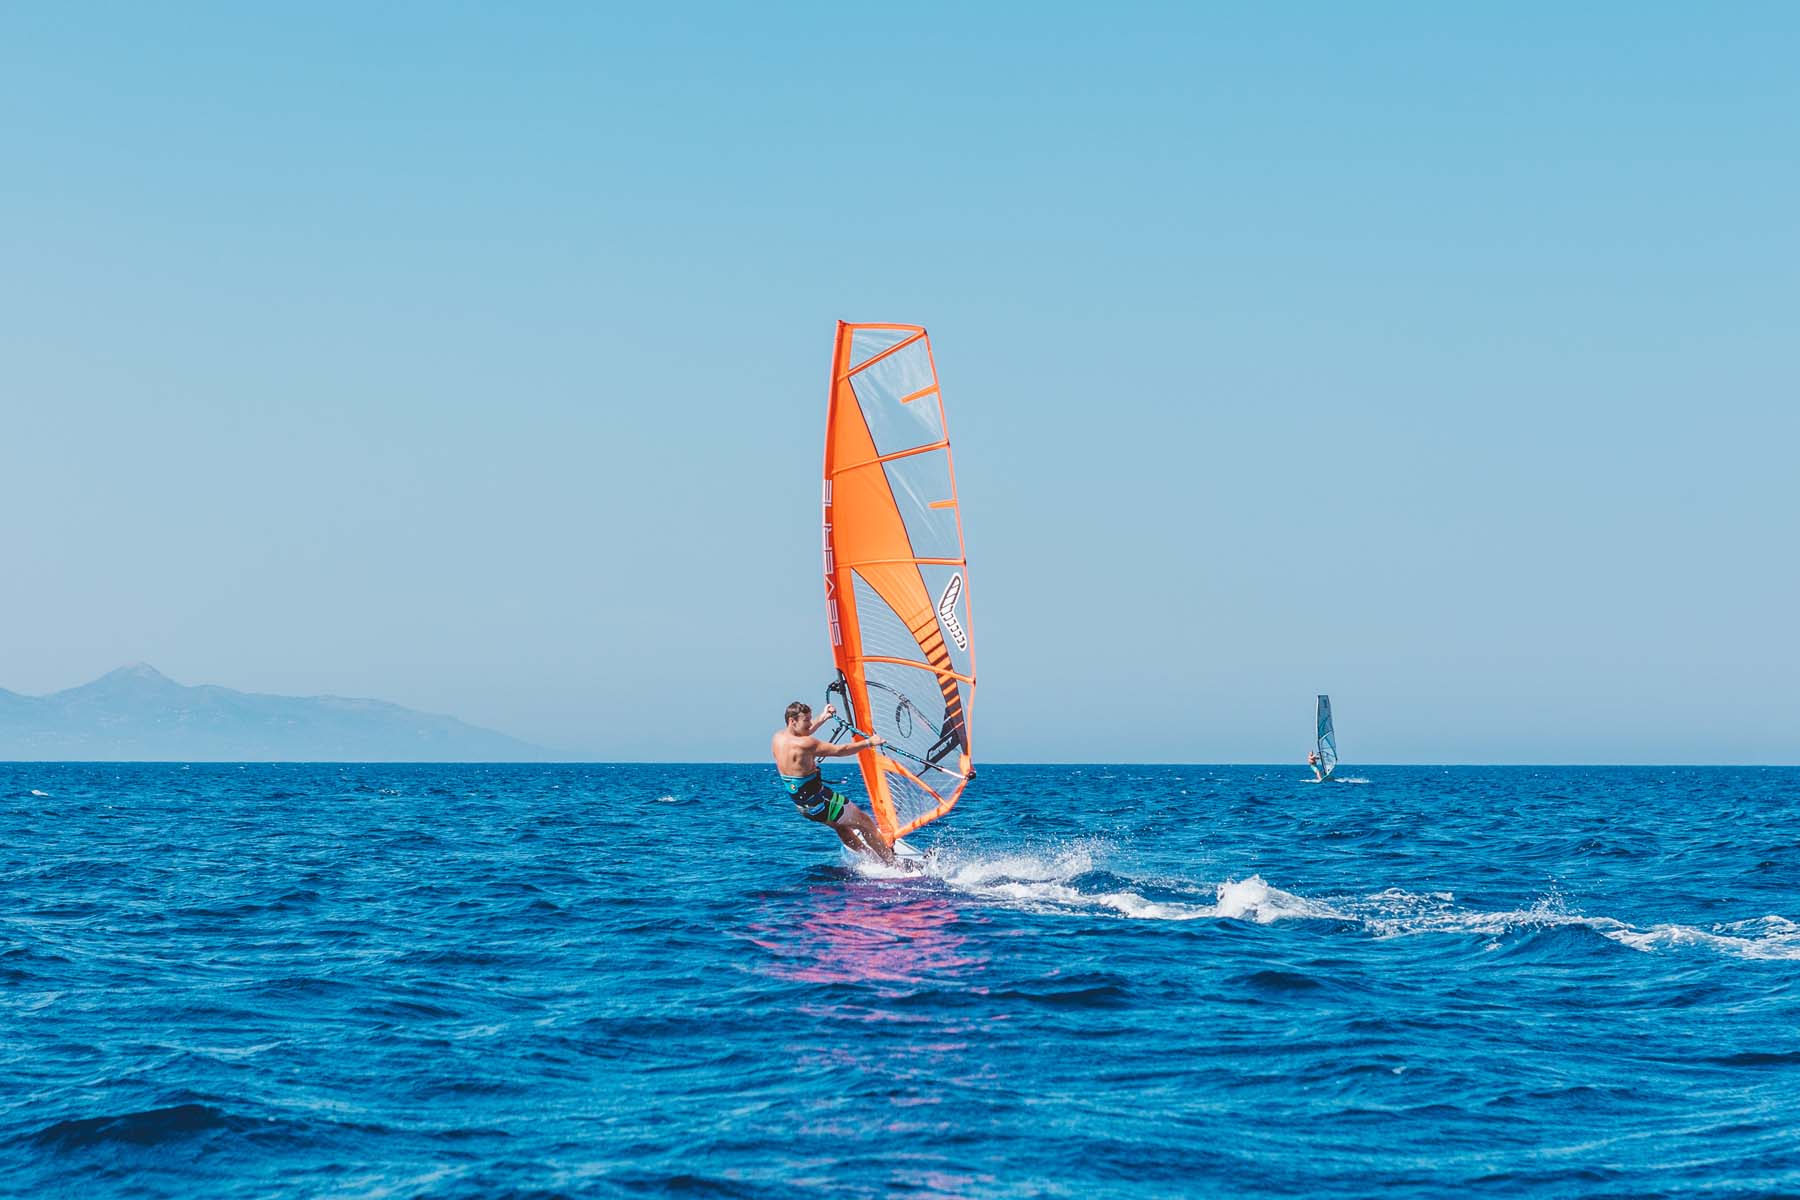 Peligoni Club guests windsurfing on the Ionian Sea